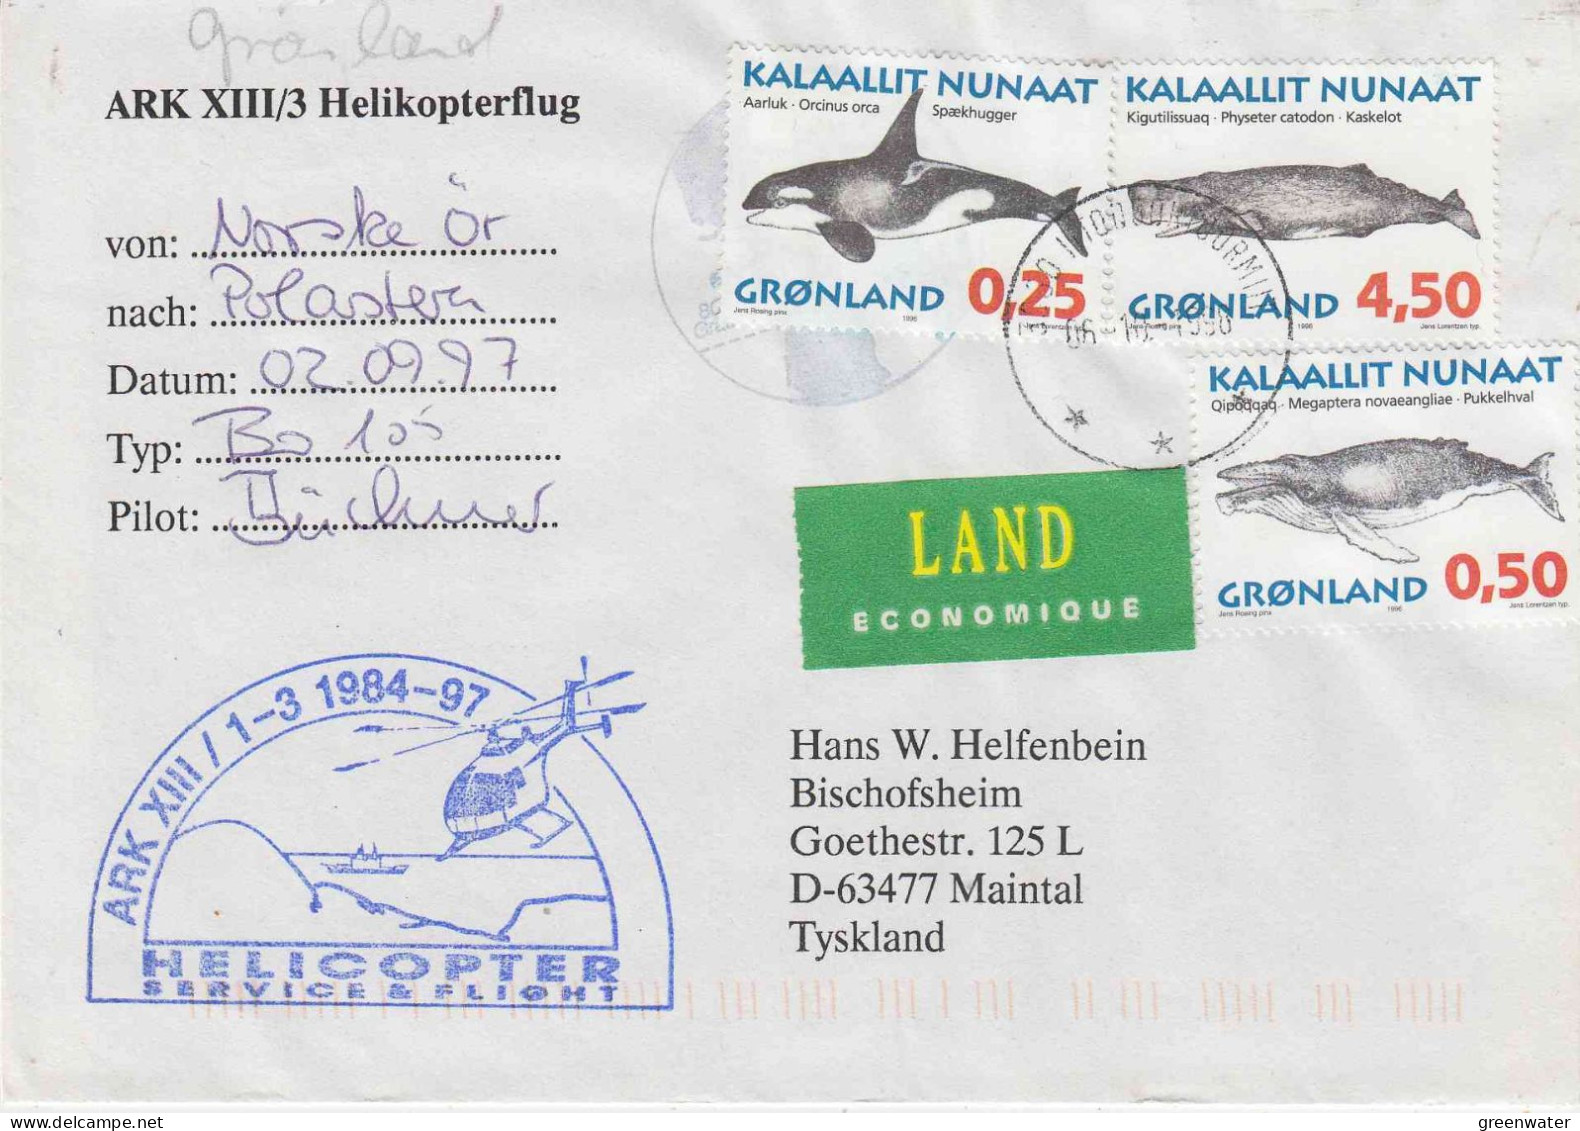 Greenland Heli Flight Norske Or To Polarstern 02.09.1997 (JS151) - Vols Polaires